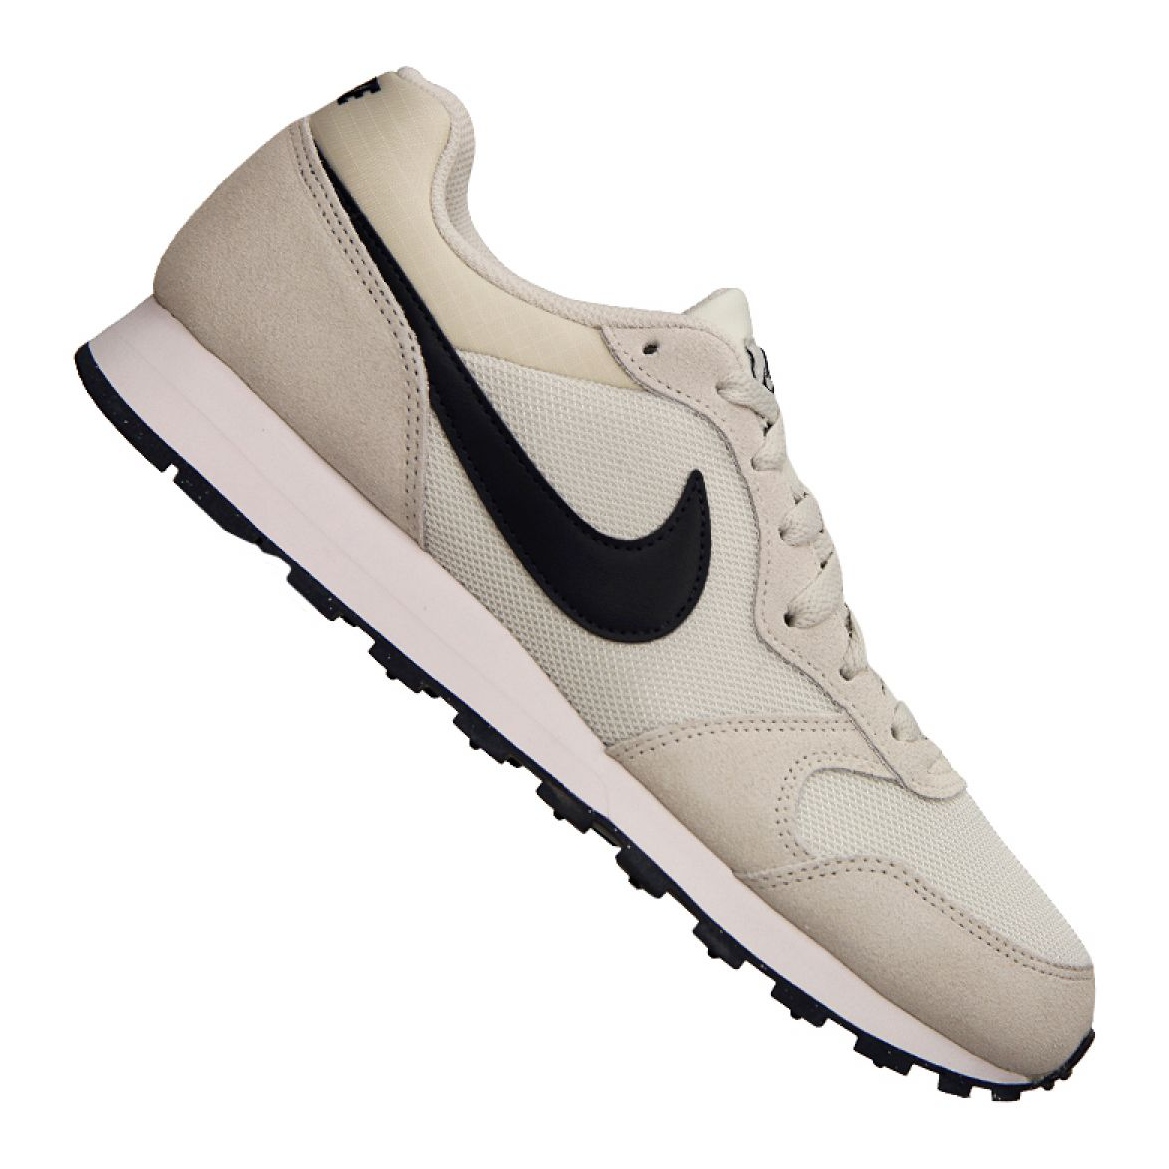 Overvloedig Socialisme spek Nike Md Runner 2 M 749794-009 shoe beige - KeeShoes